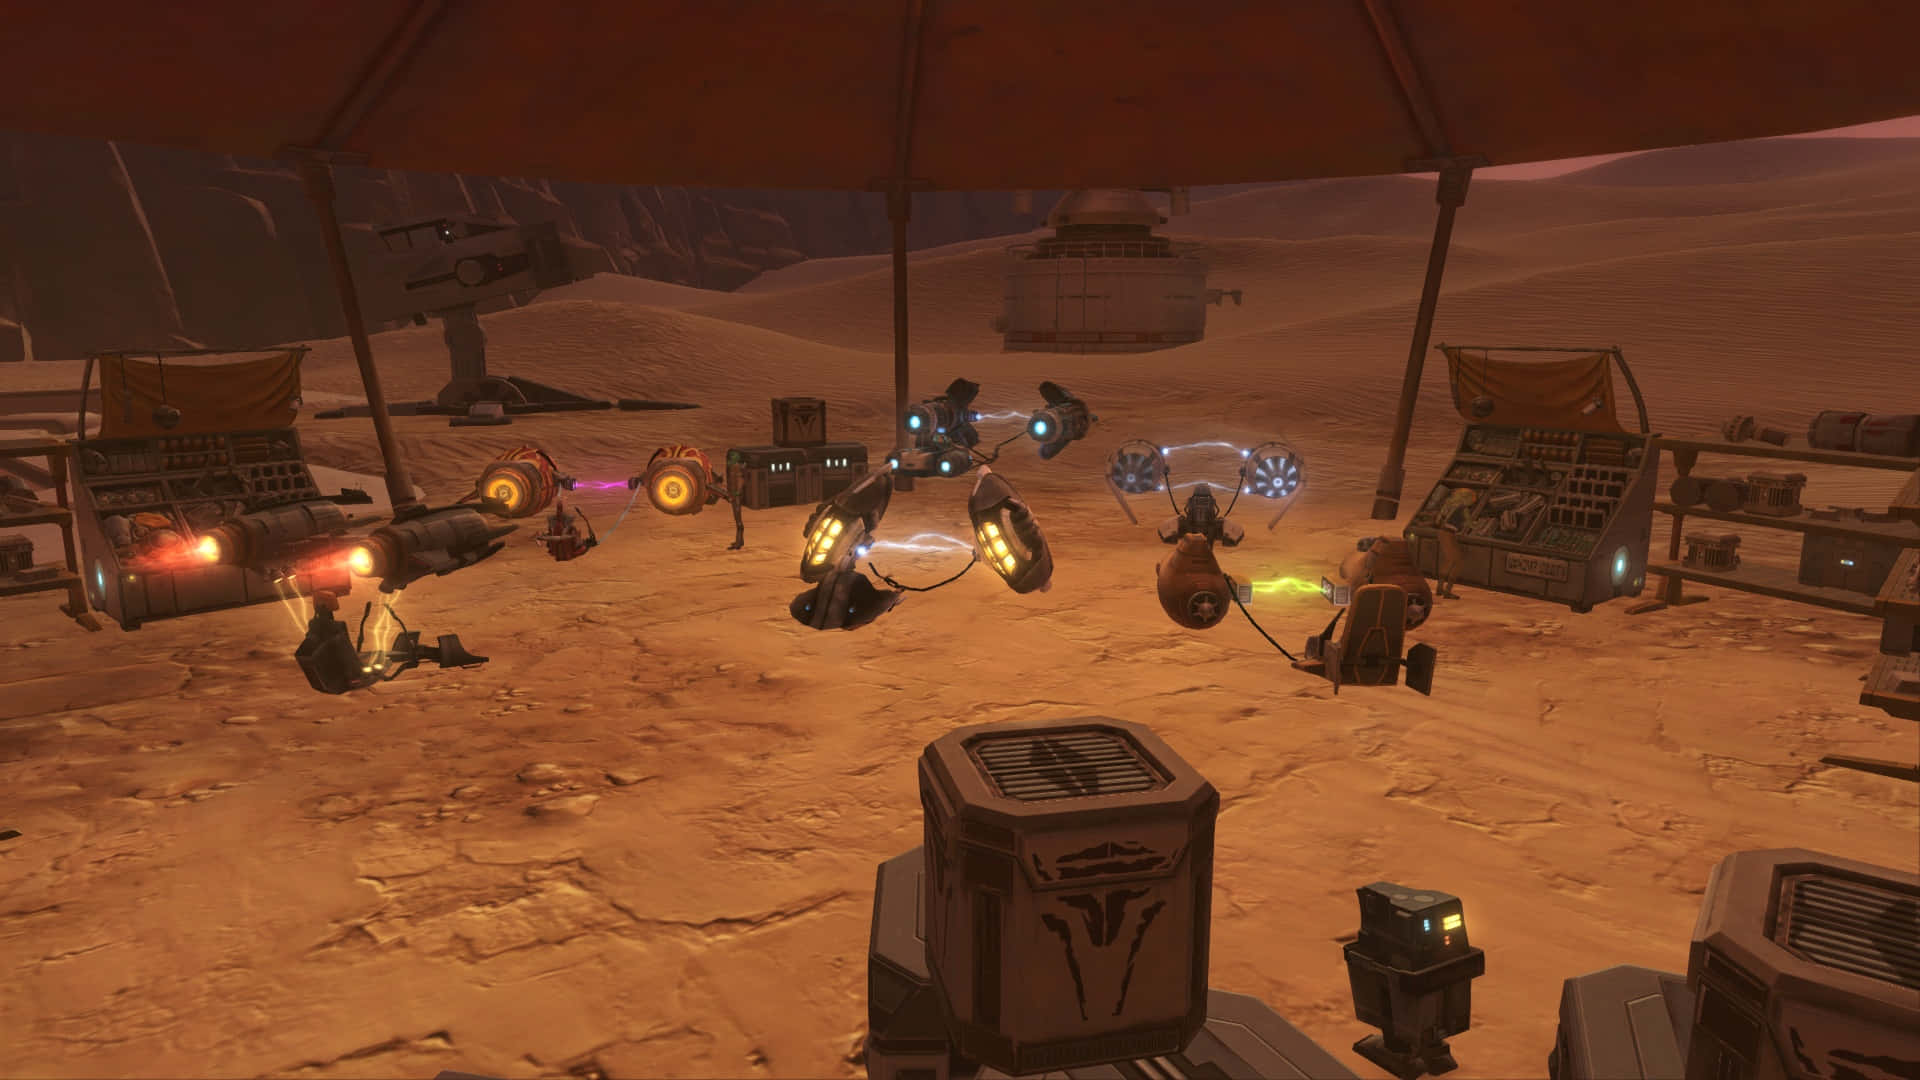 Intense Podracing battle in the Tatooine Desert Wallpaper